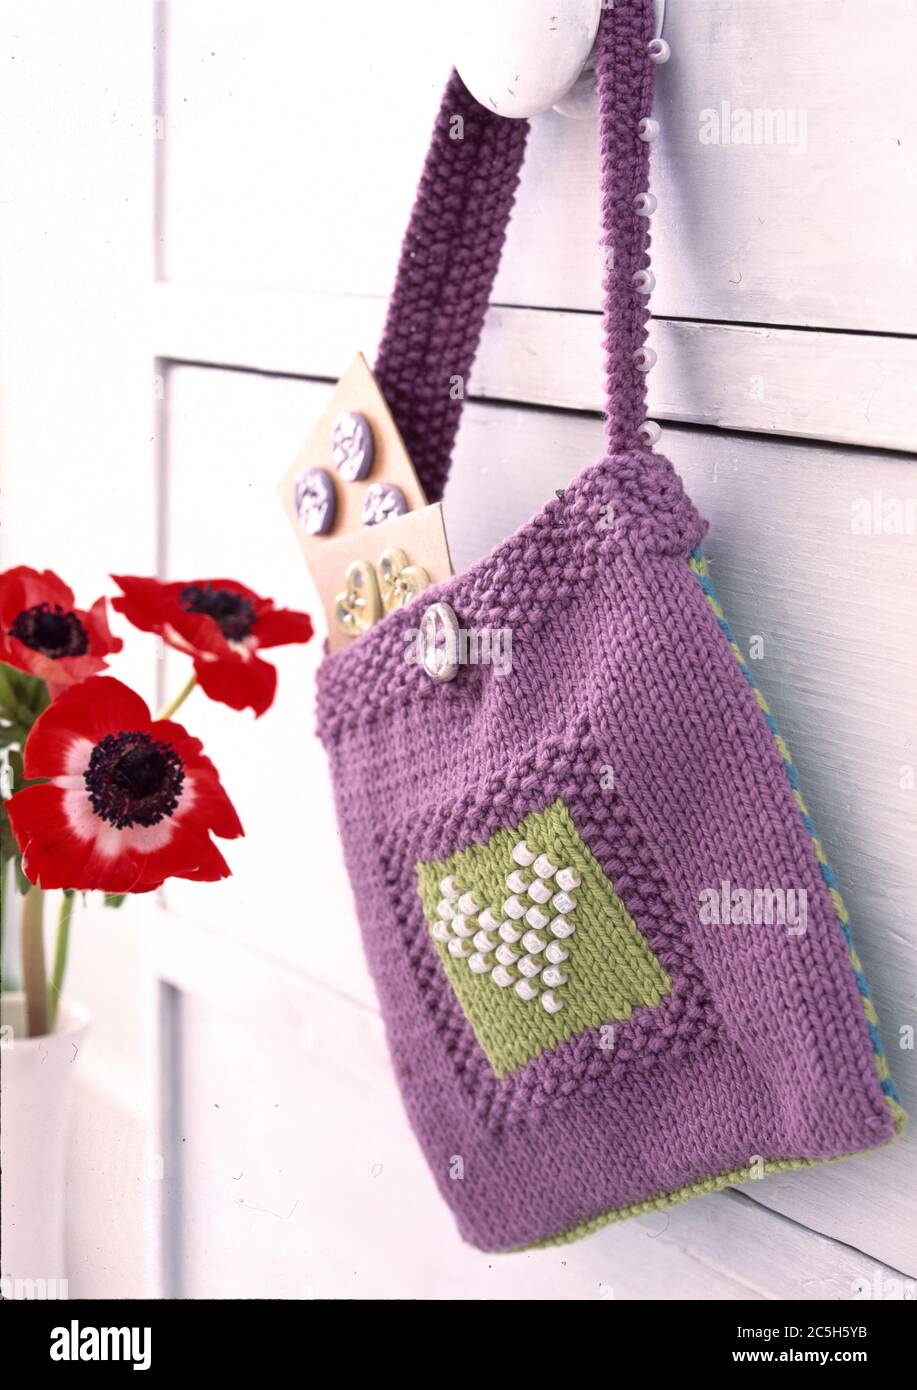 Mauve crochet bag hanging on chest handle Stock Photo